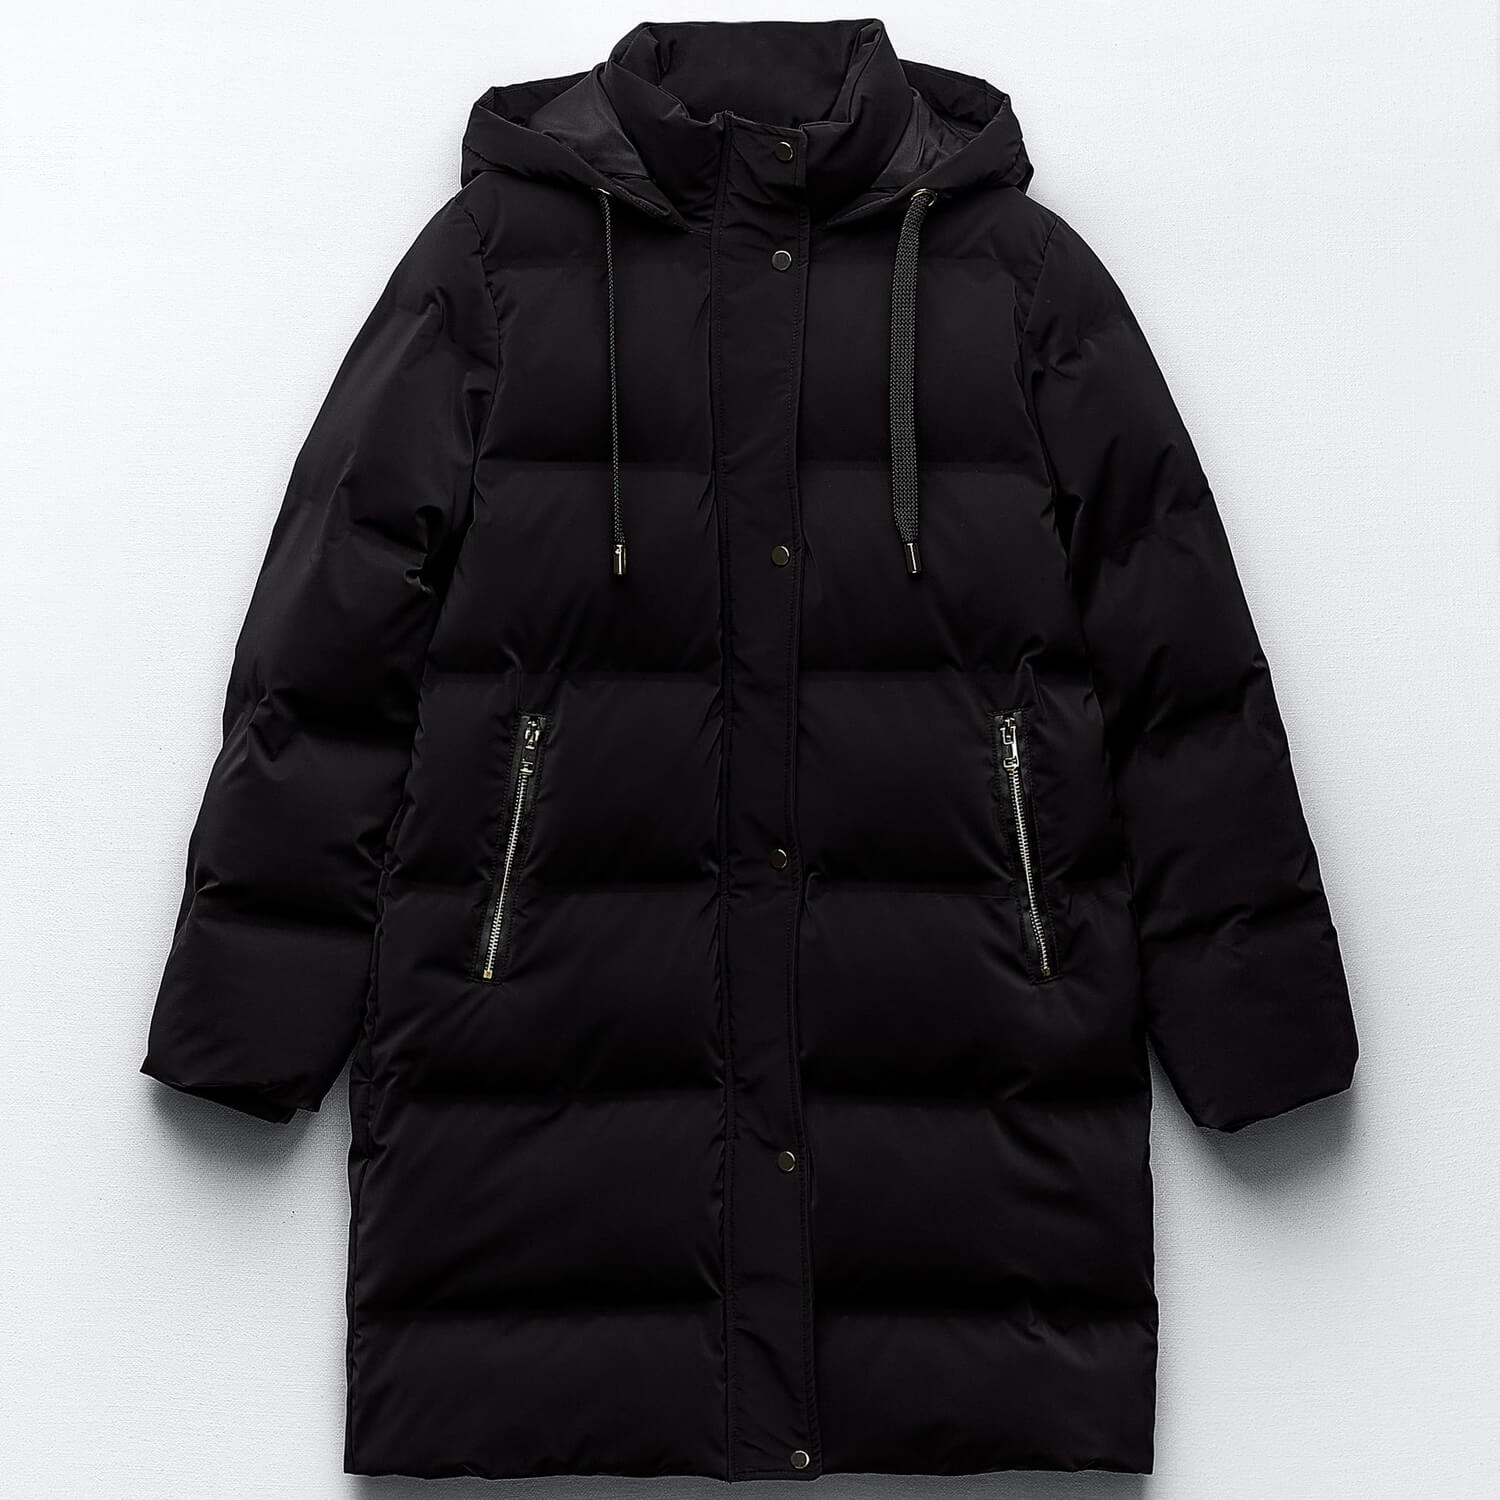 Куртка-анорак Zara Hooded With Wind Protection, черный толстовка jeep средней длины карманы капюшон карманы размер xl розовый